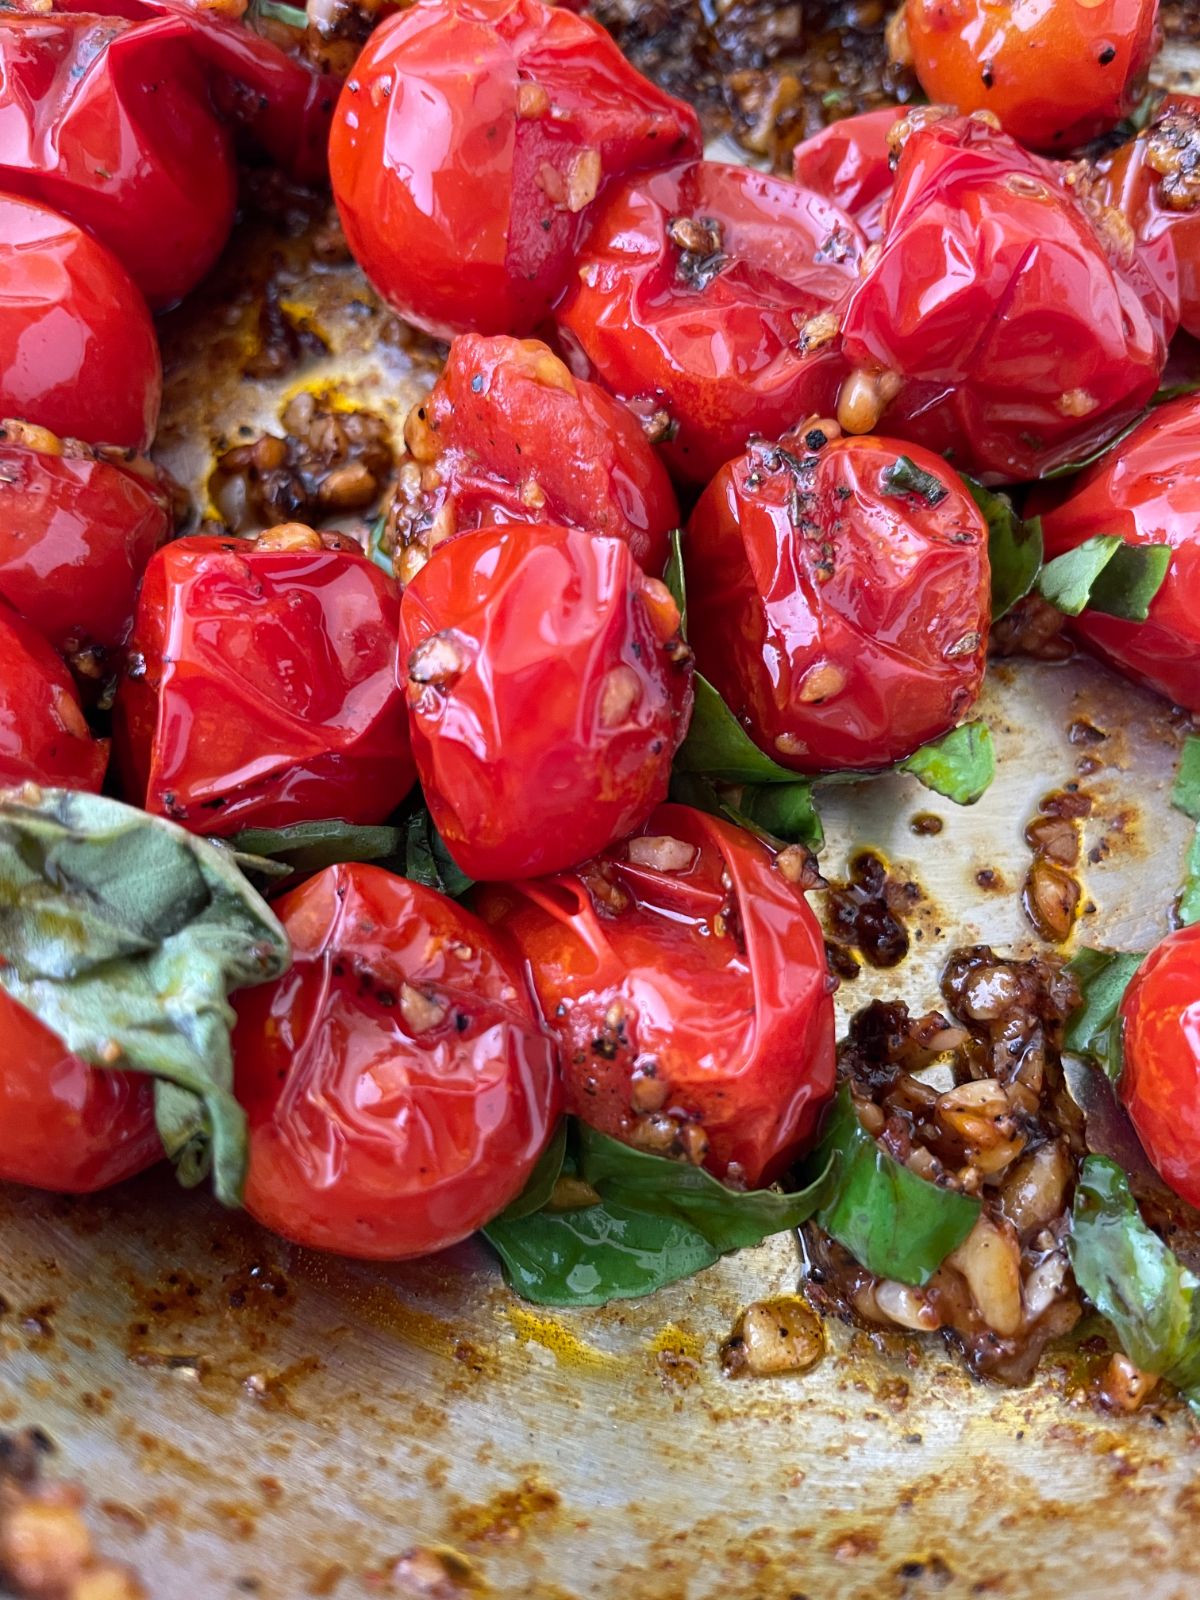 add some Italian seasonings on the tomatoes 